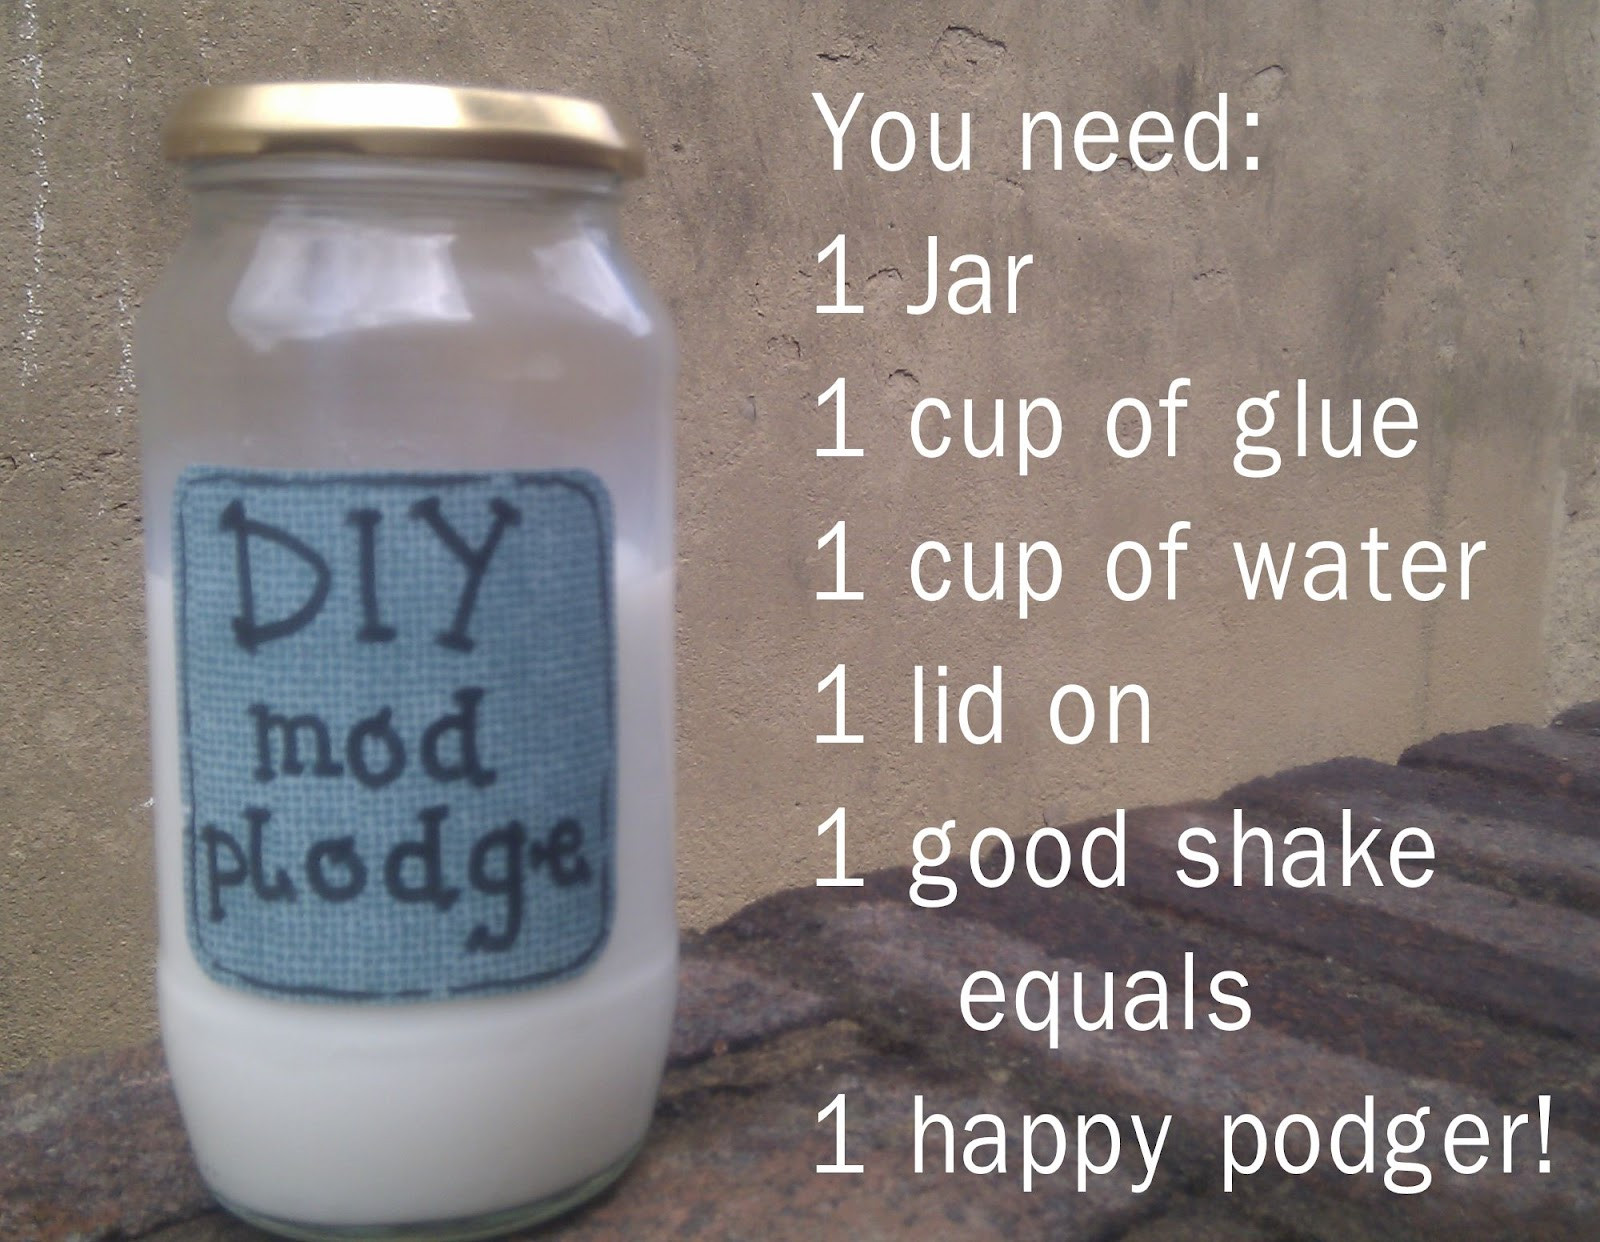 Best ideas about DIY Mod Podge
. Save or Pin KugAlls DIY Mod Podge Now.